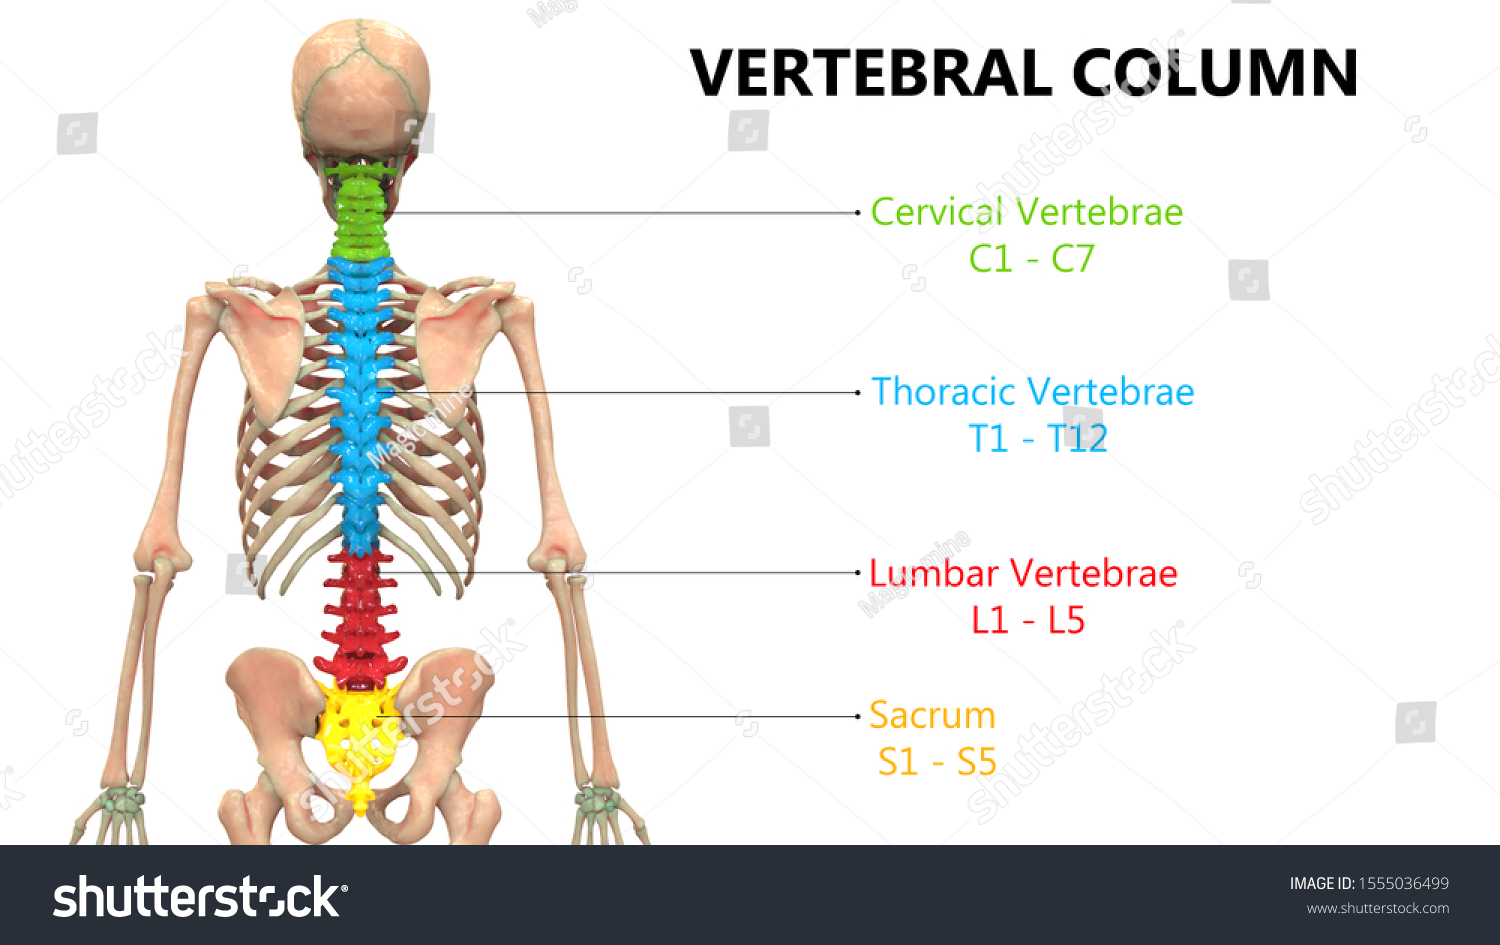 Column vertebral What are